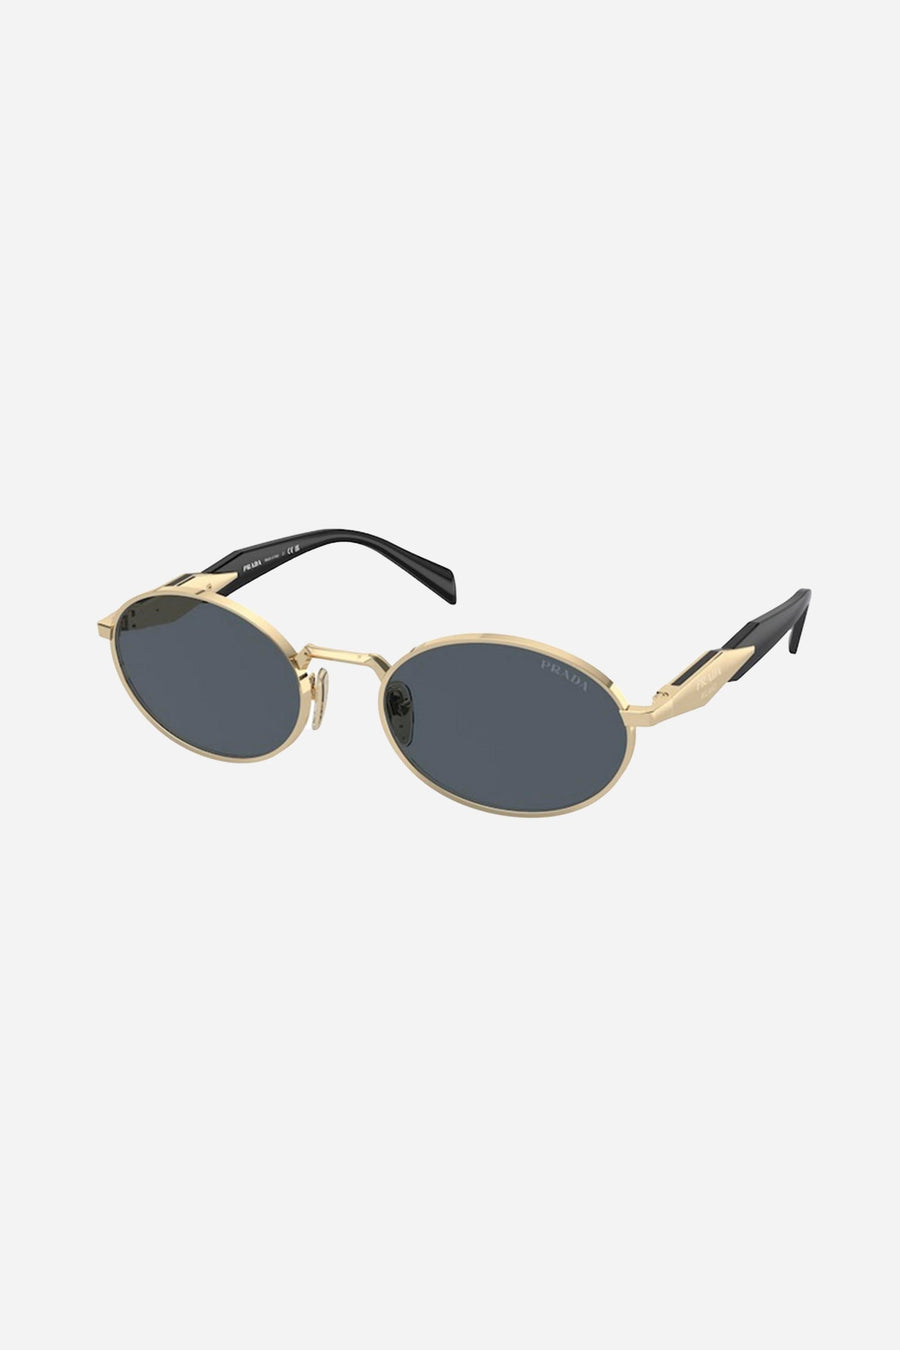 Prada gold round sunglasses